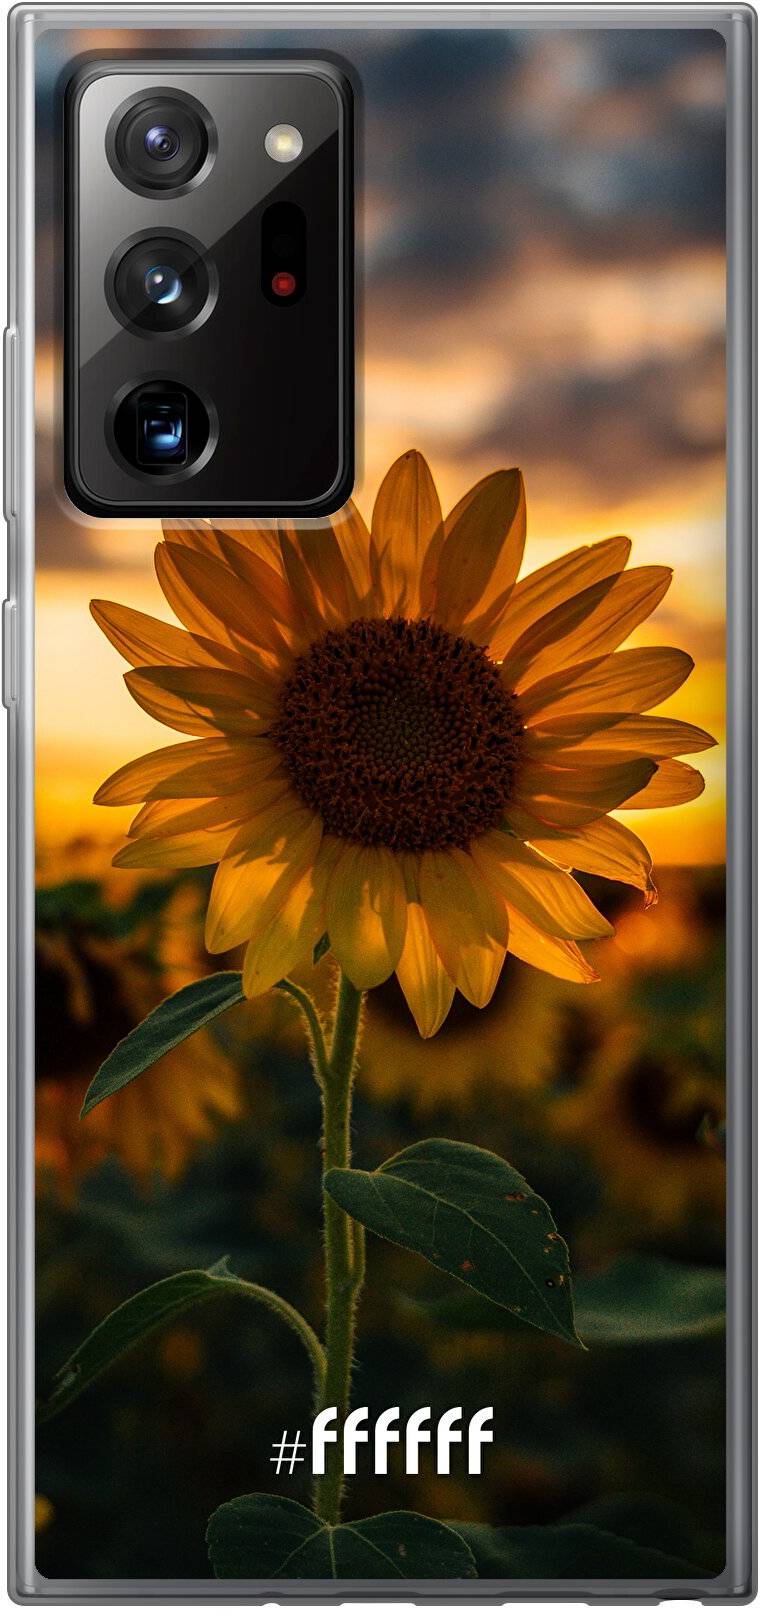 Sunset Sunflower Galaxy Note 20 Ultra